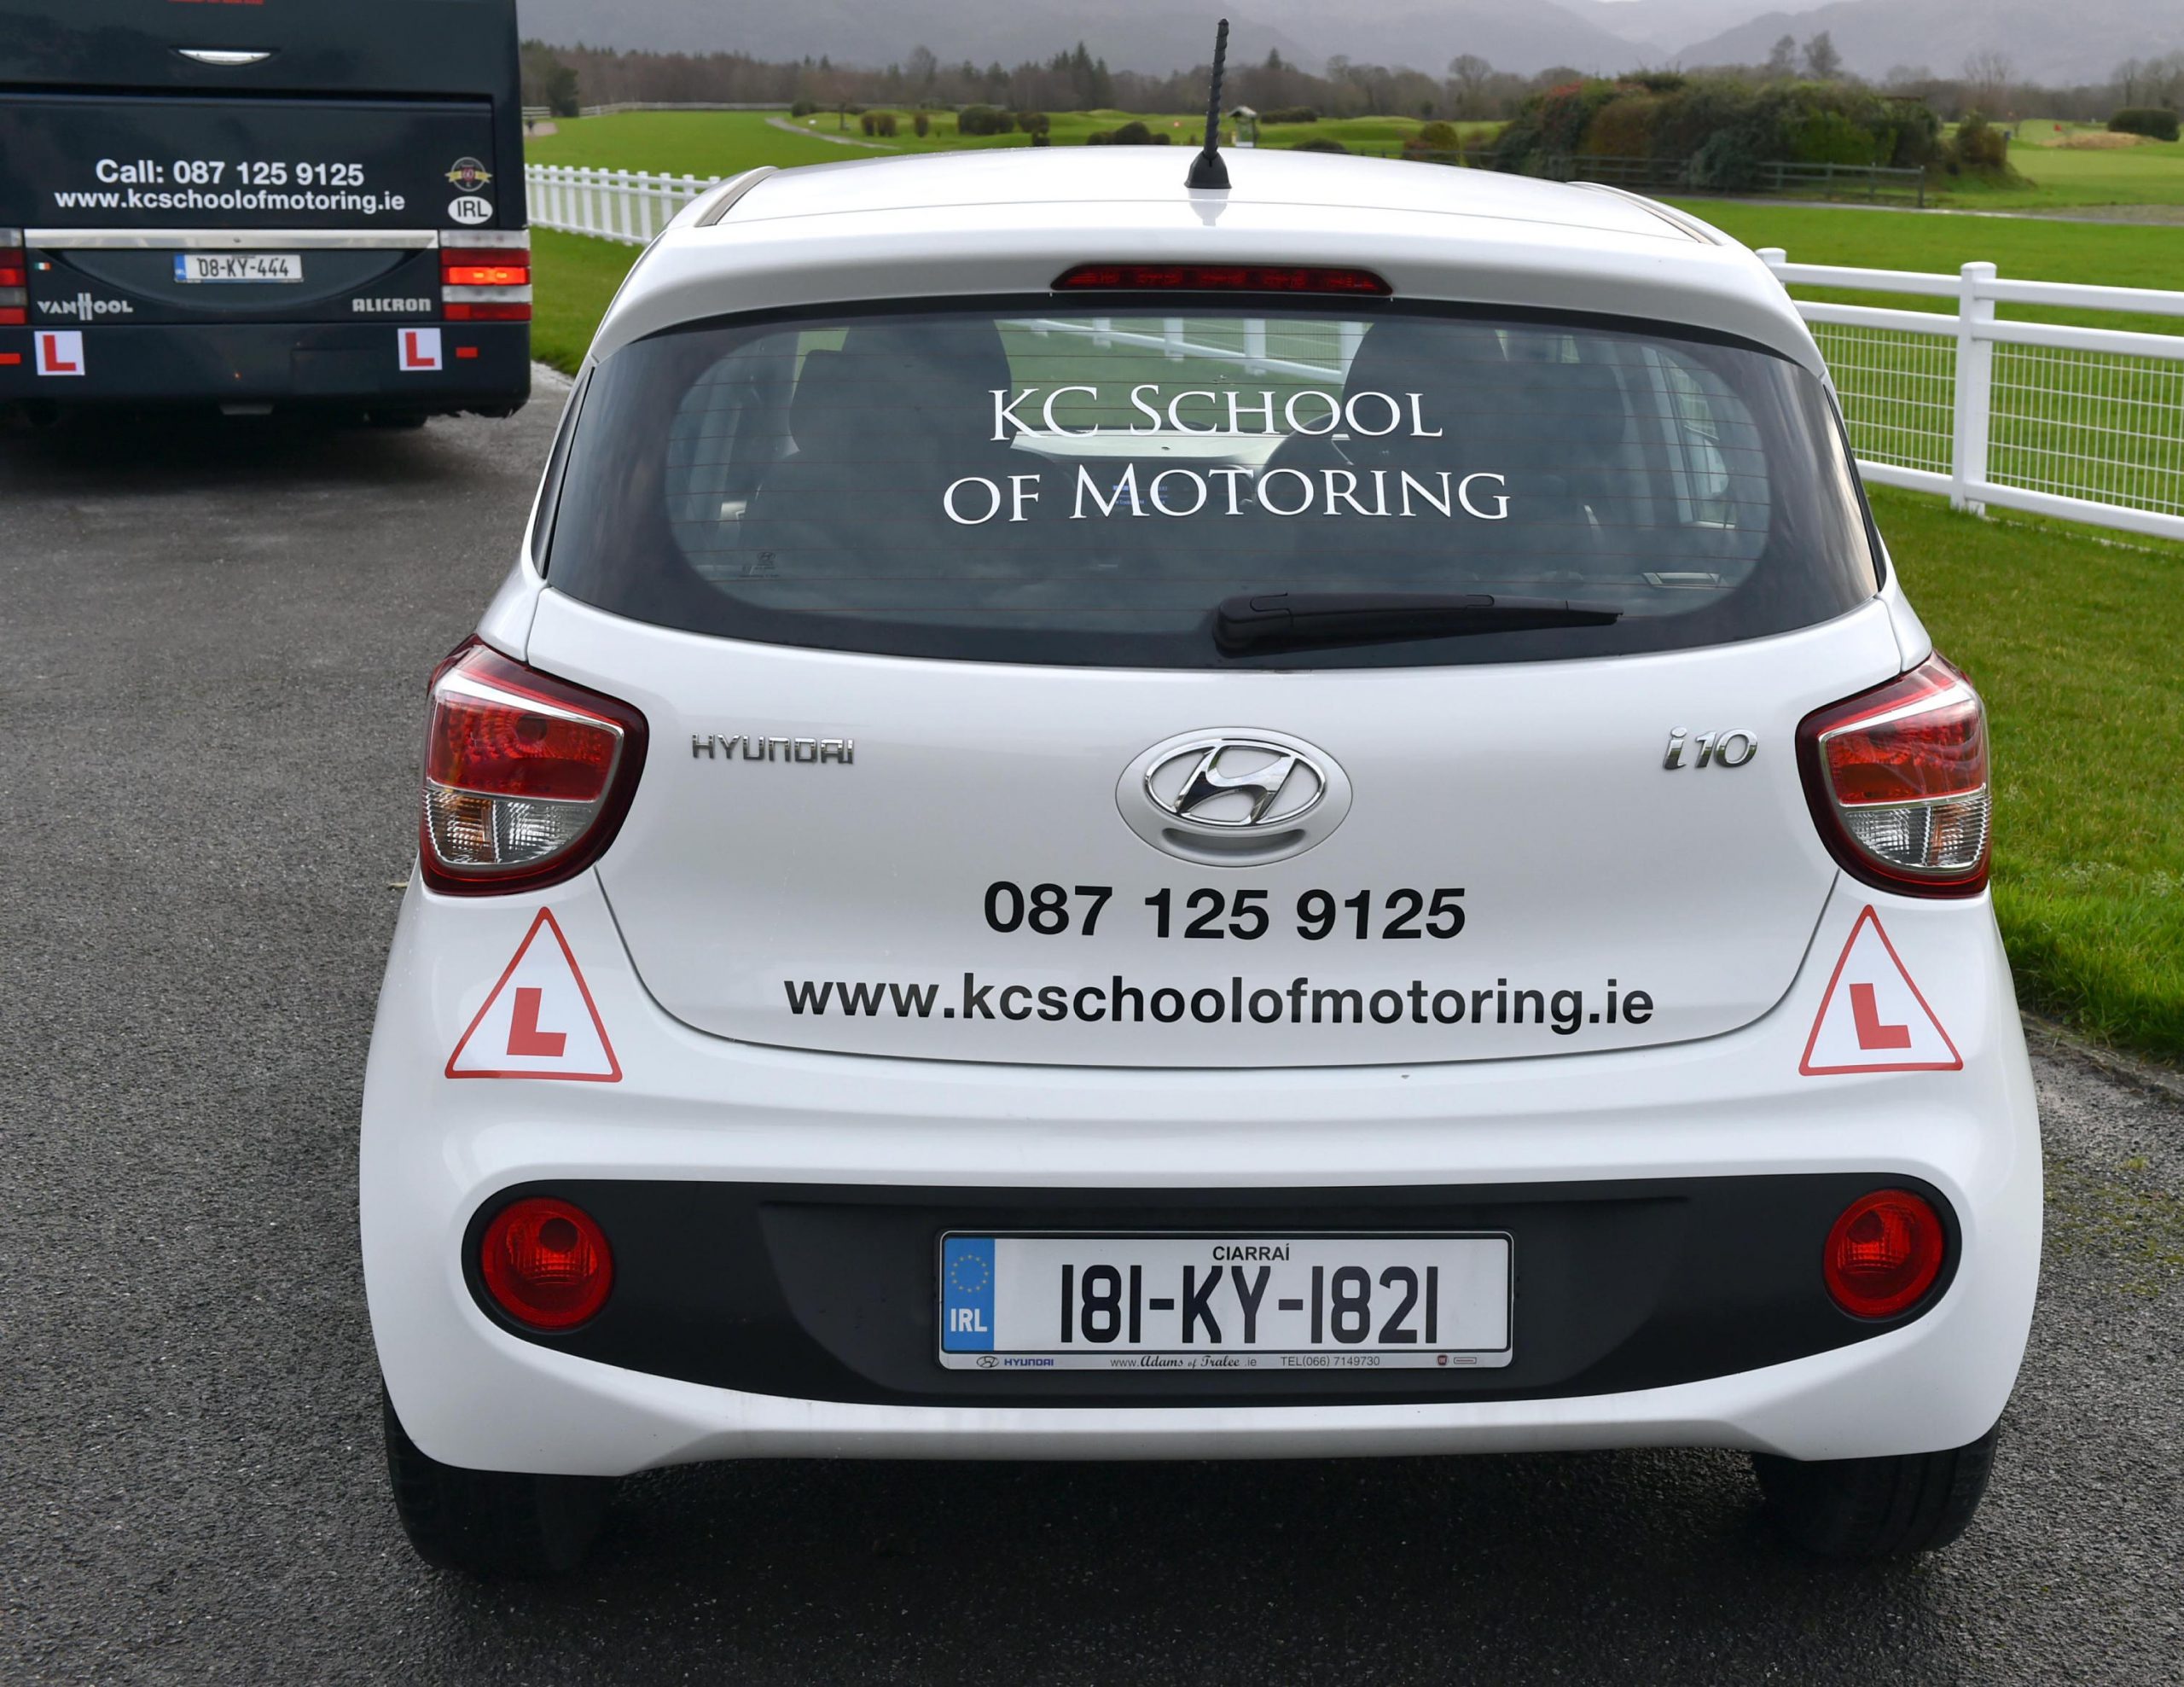 Kerry Coaches School of Motoring in Killarney, County Kerry.
Photo: Don MacMonagle